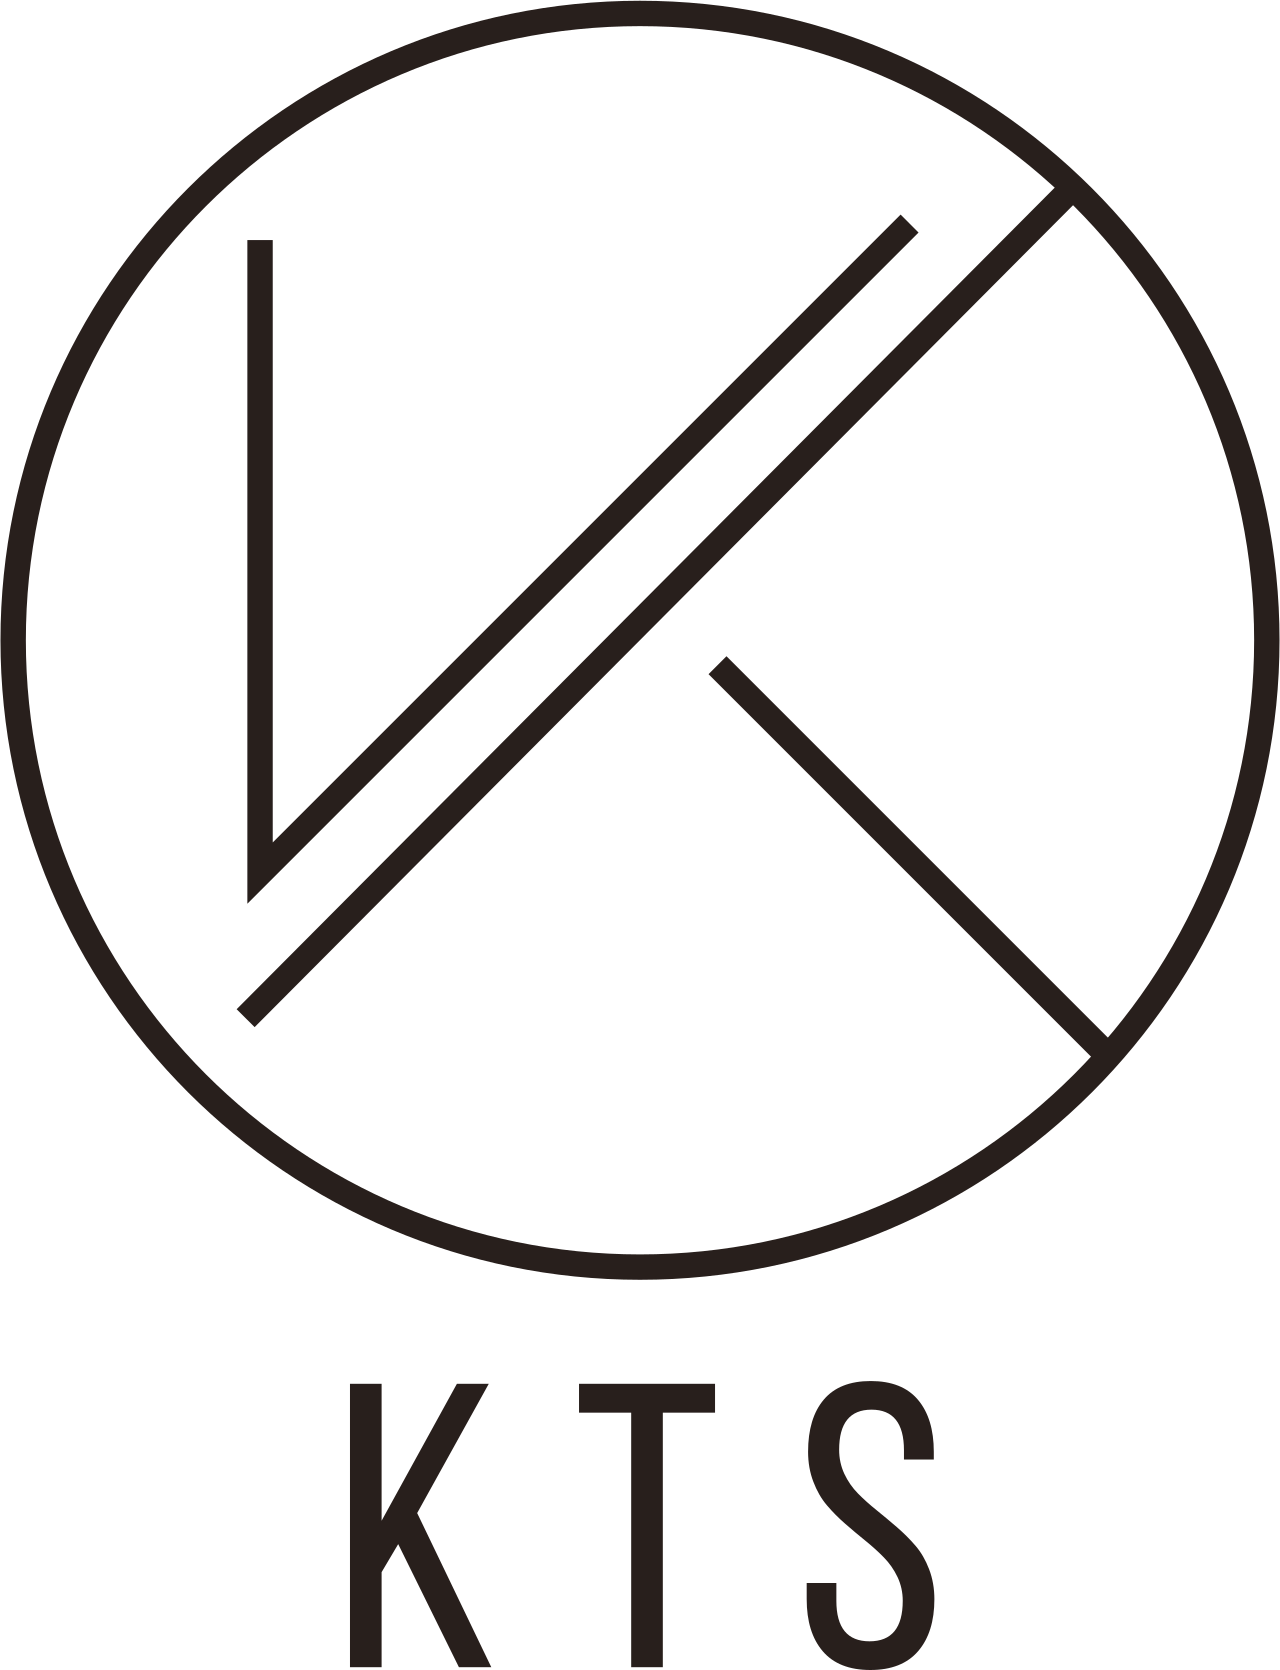 KTS's logo